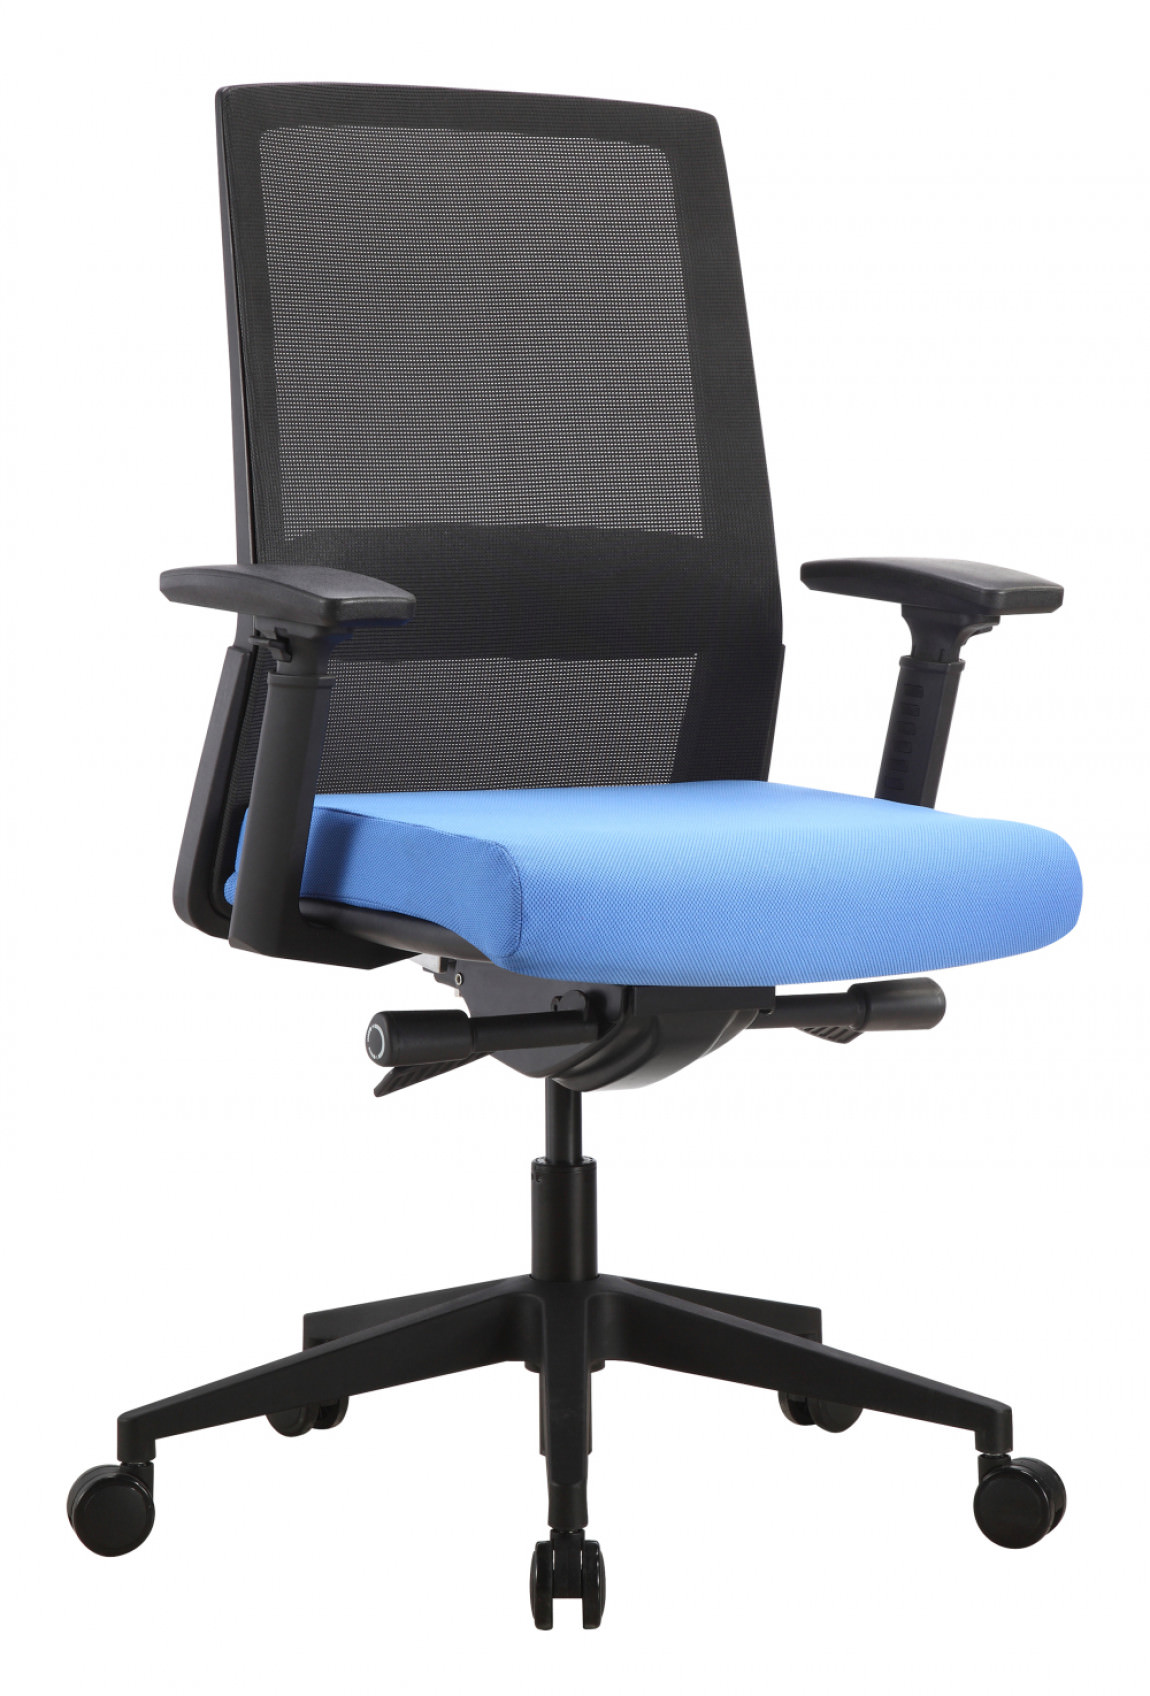 https://madisonliquidators.com/images/p/1150/10255-mesh-back-task-chair-with-blue-seat-cover-1.jpg